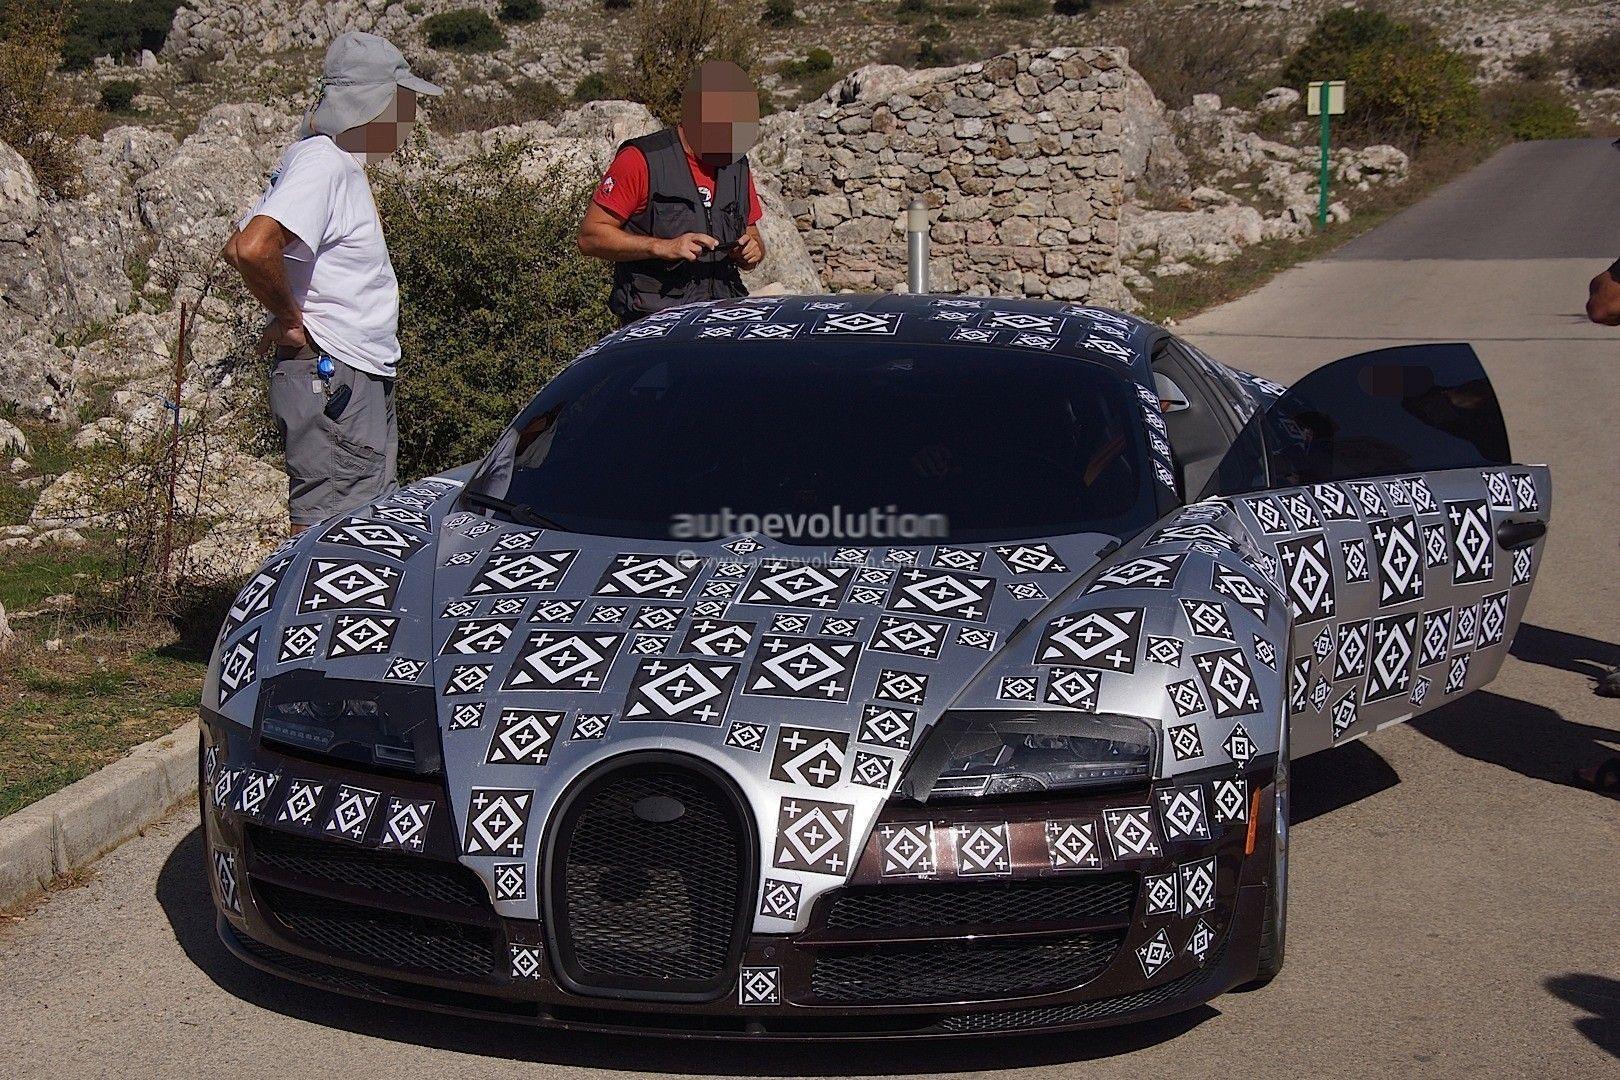 New Bugatti Chiron Teaser Released, Prepare for the Fastest Hybrid